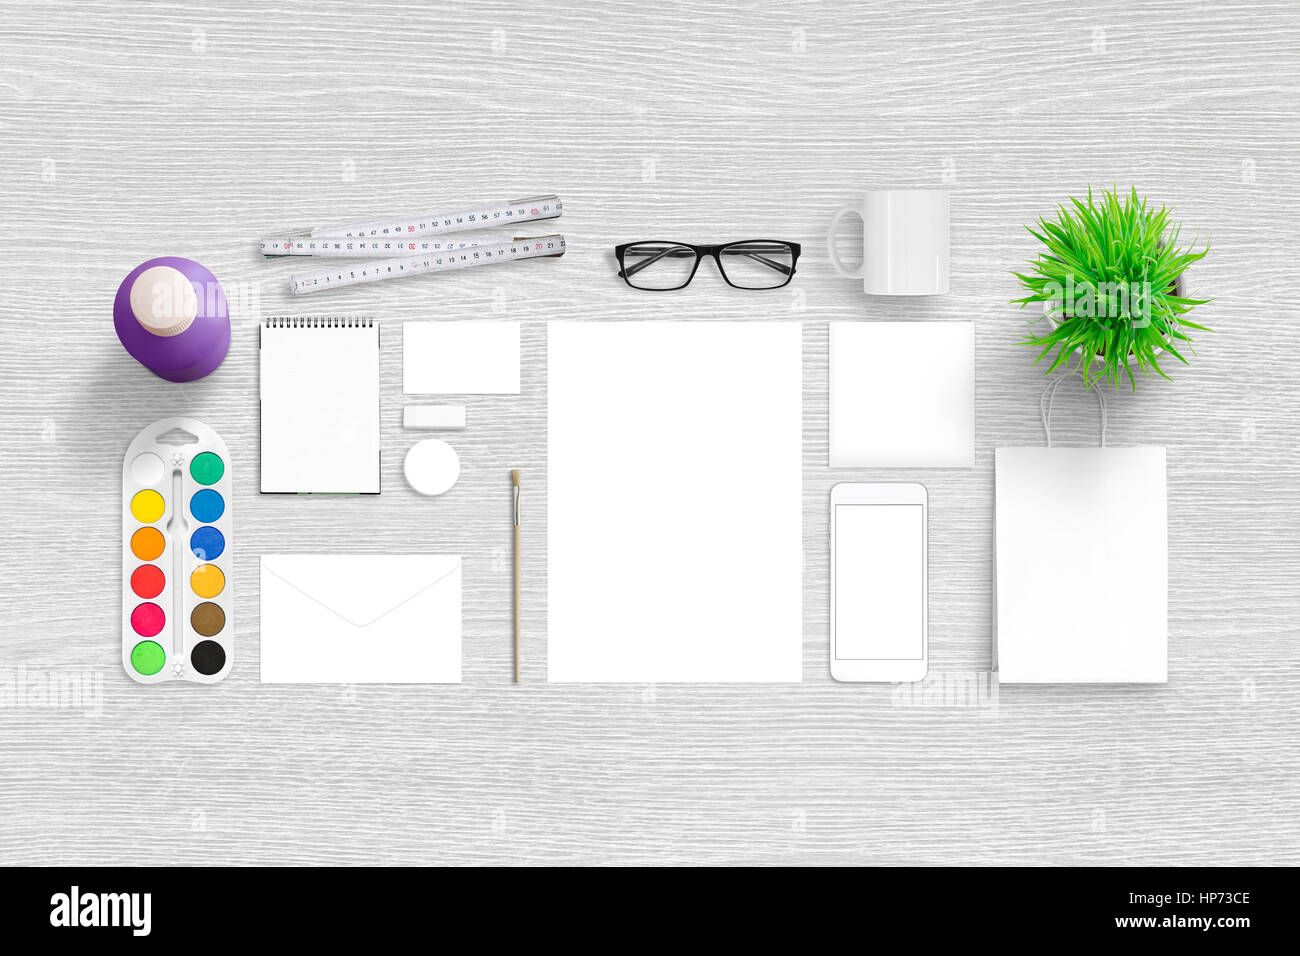 Brand identity portfolio presentation. Top view scene with isolated, blank stationery. Smart phone for app design showcase. Stock Photo